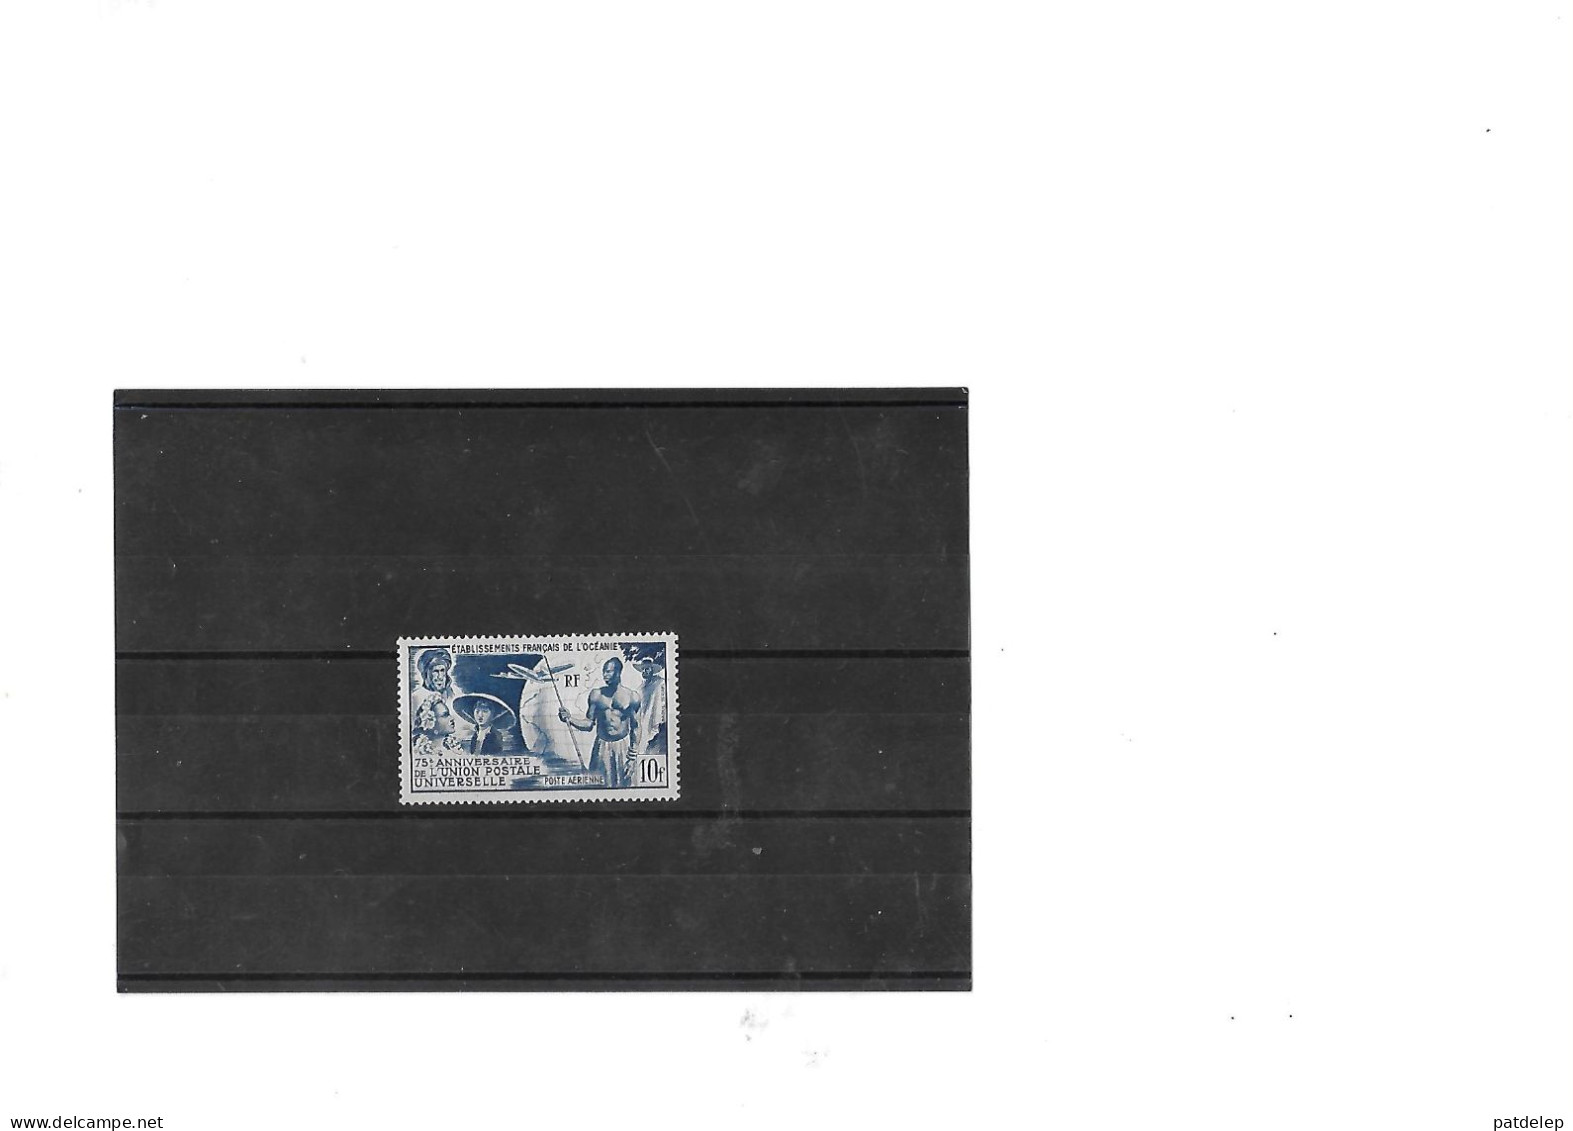 Oceanie Francaise UPU 1949 NSC - UPU (Universal Postal Union)